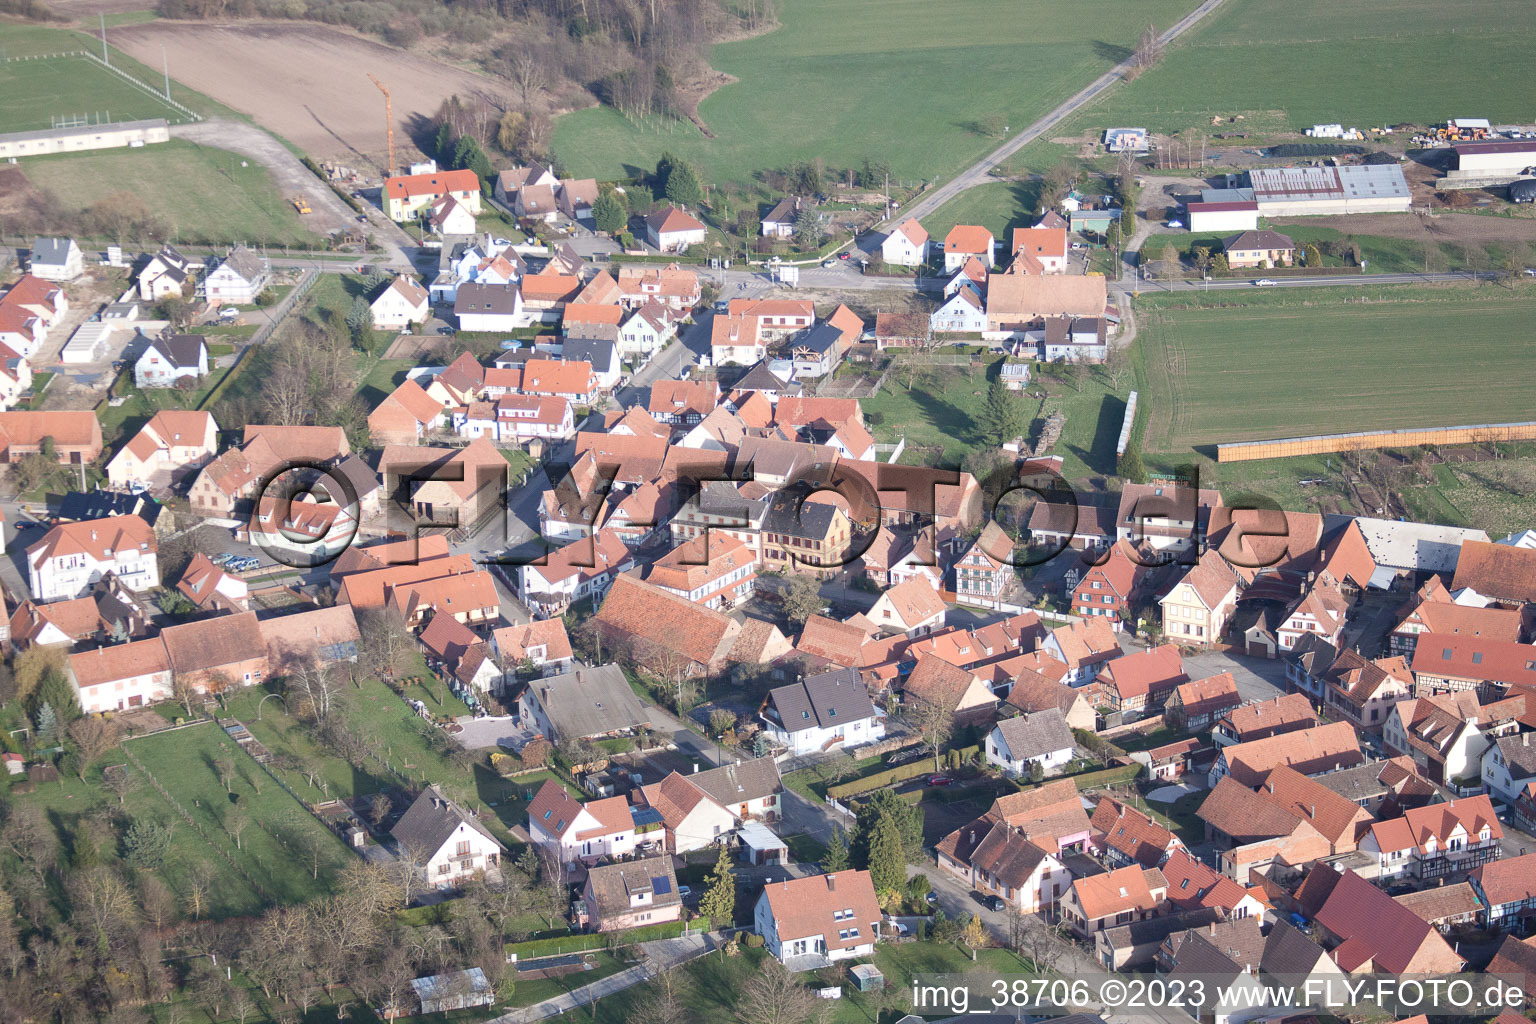 Morsbronn-les-Bains im Bundesland Bas-Rhin, Frankreich aus der Luft betrachtet